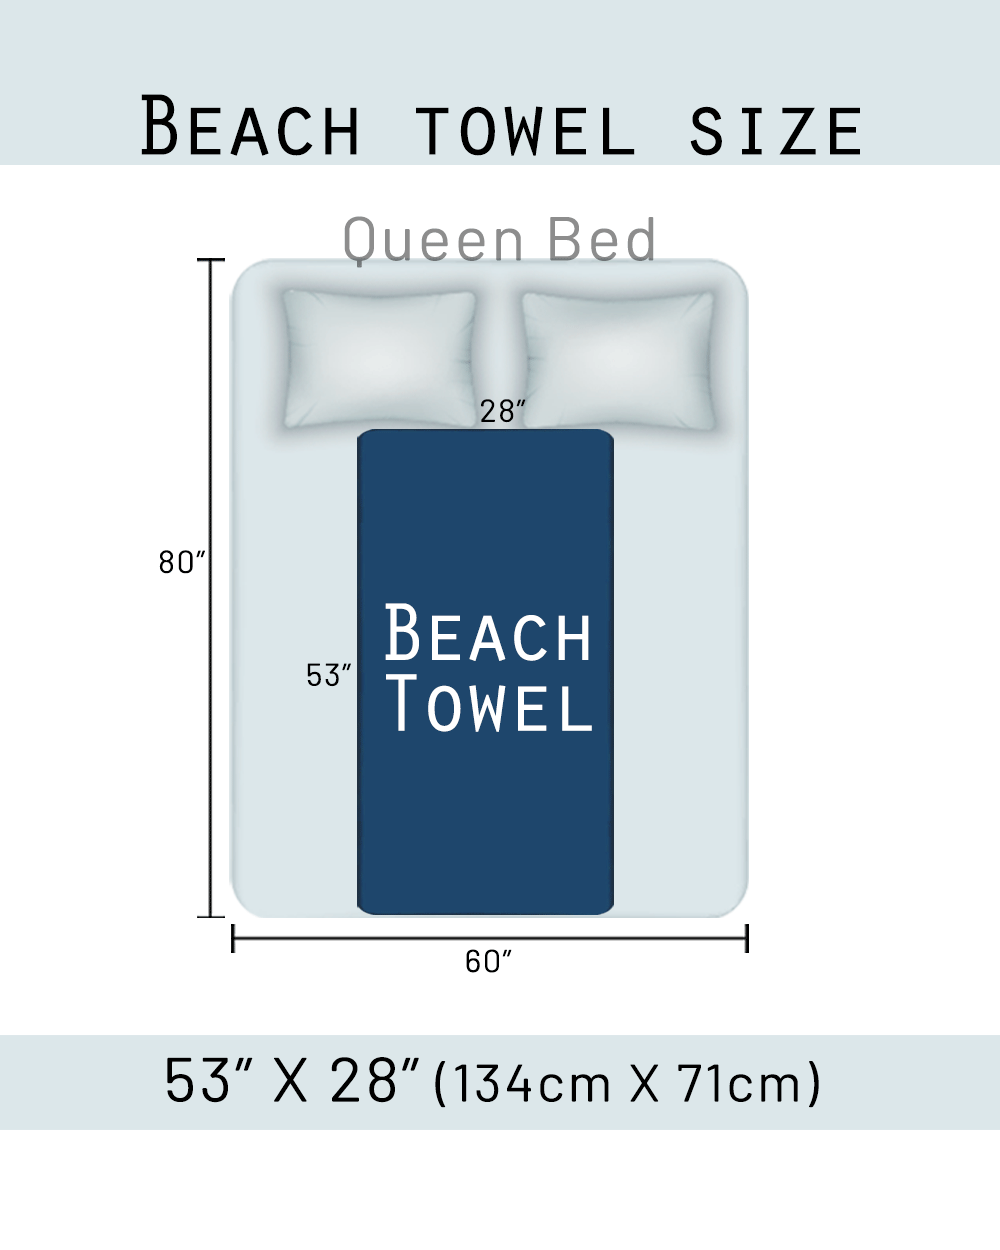 Horseshoe-Bend Beach Towel